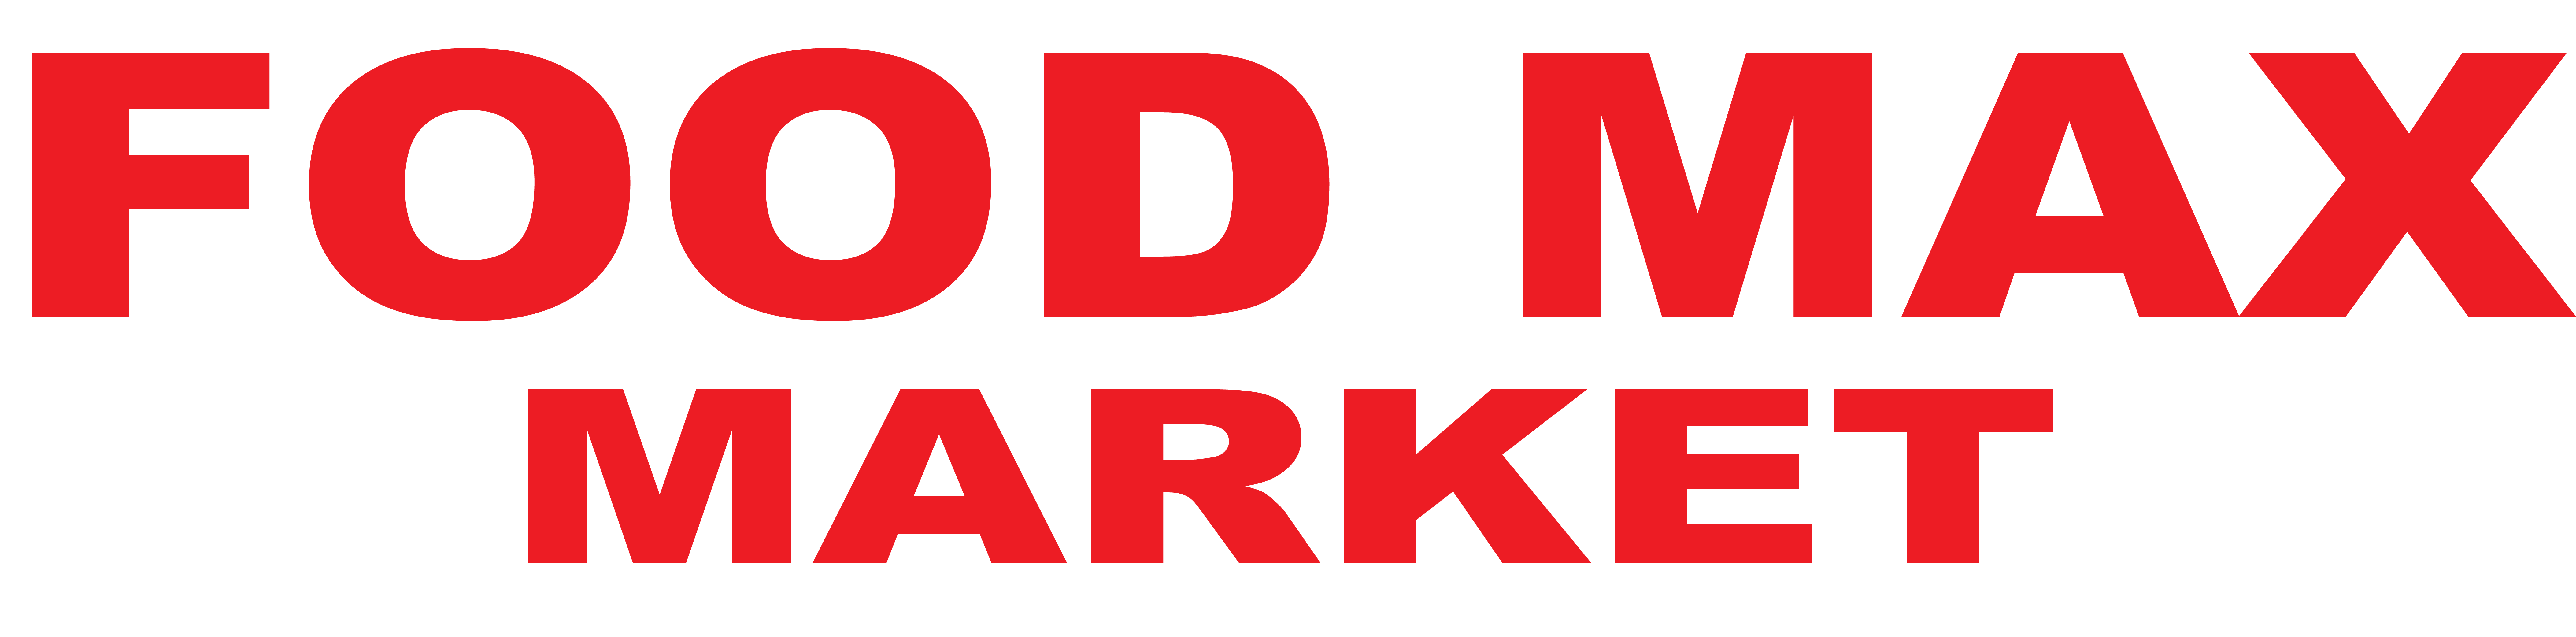 Foodmax Market Logo